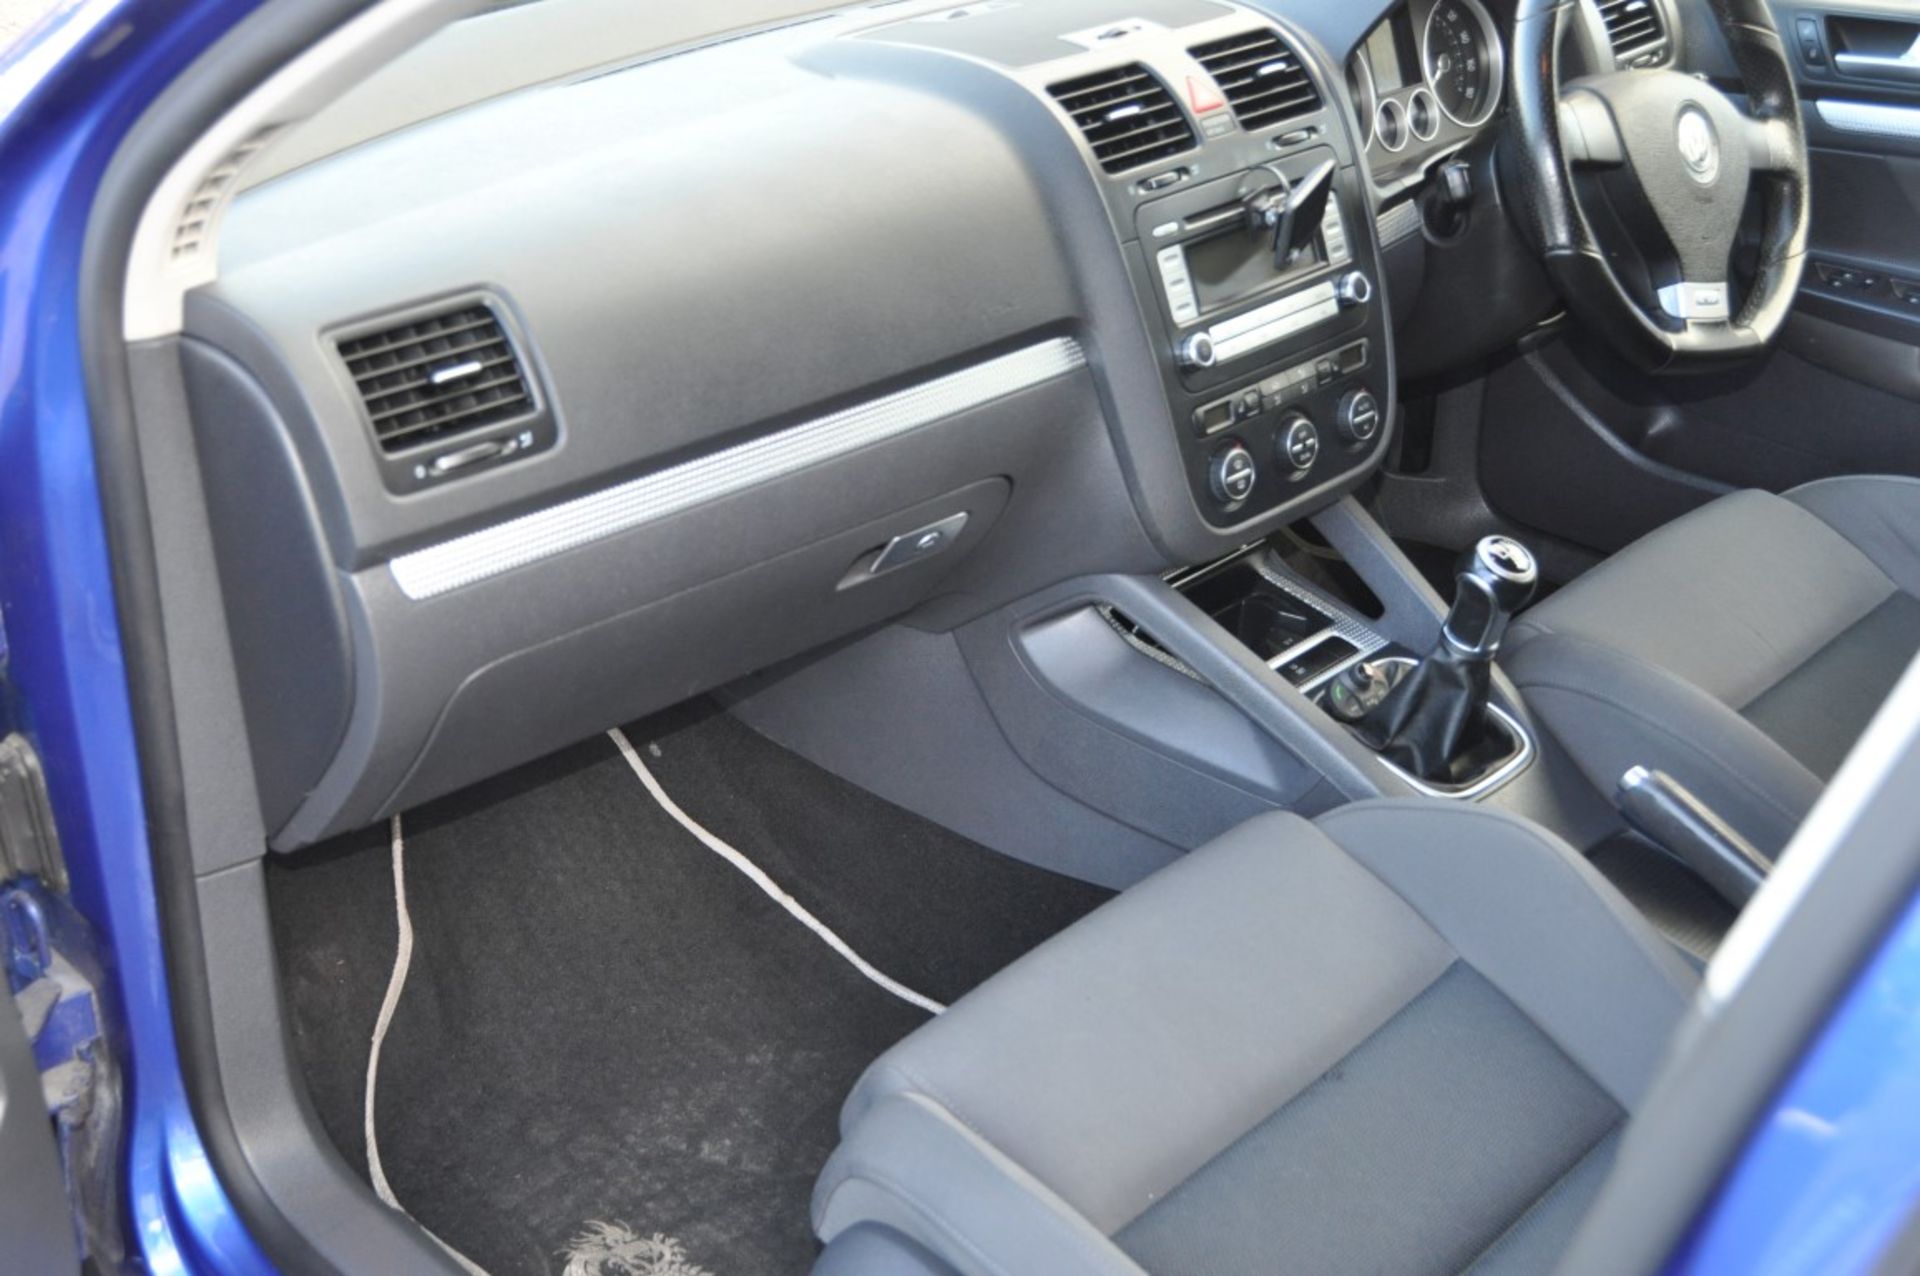 1 x Volkswagon Golf R32 V6 "5 Door" 2008, Blue - Heated Seats, 42,733 Miles - MOT Jan 2016 - Image 9 of 25